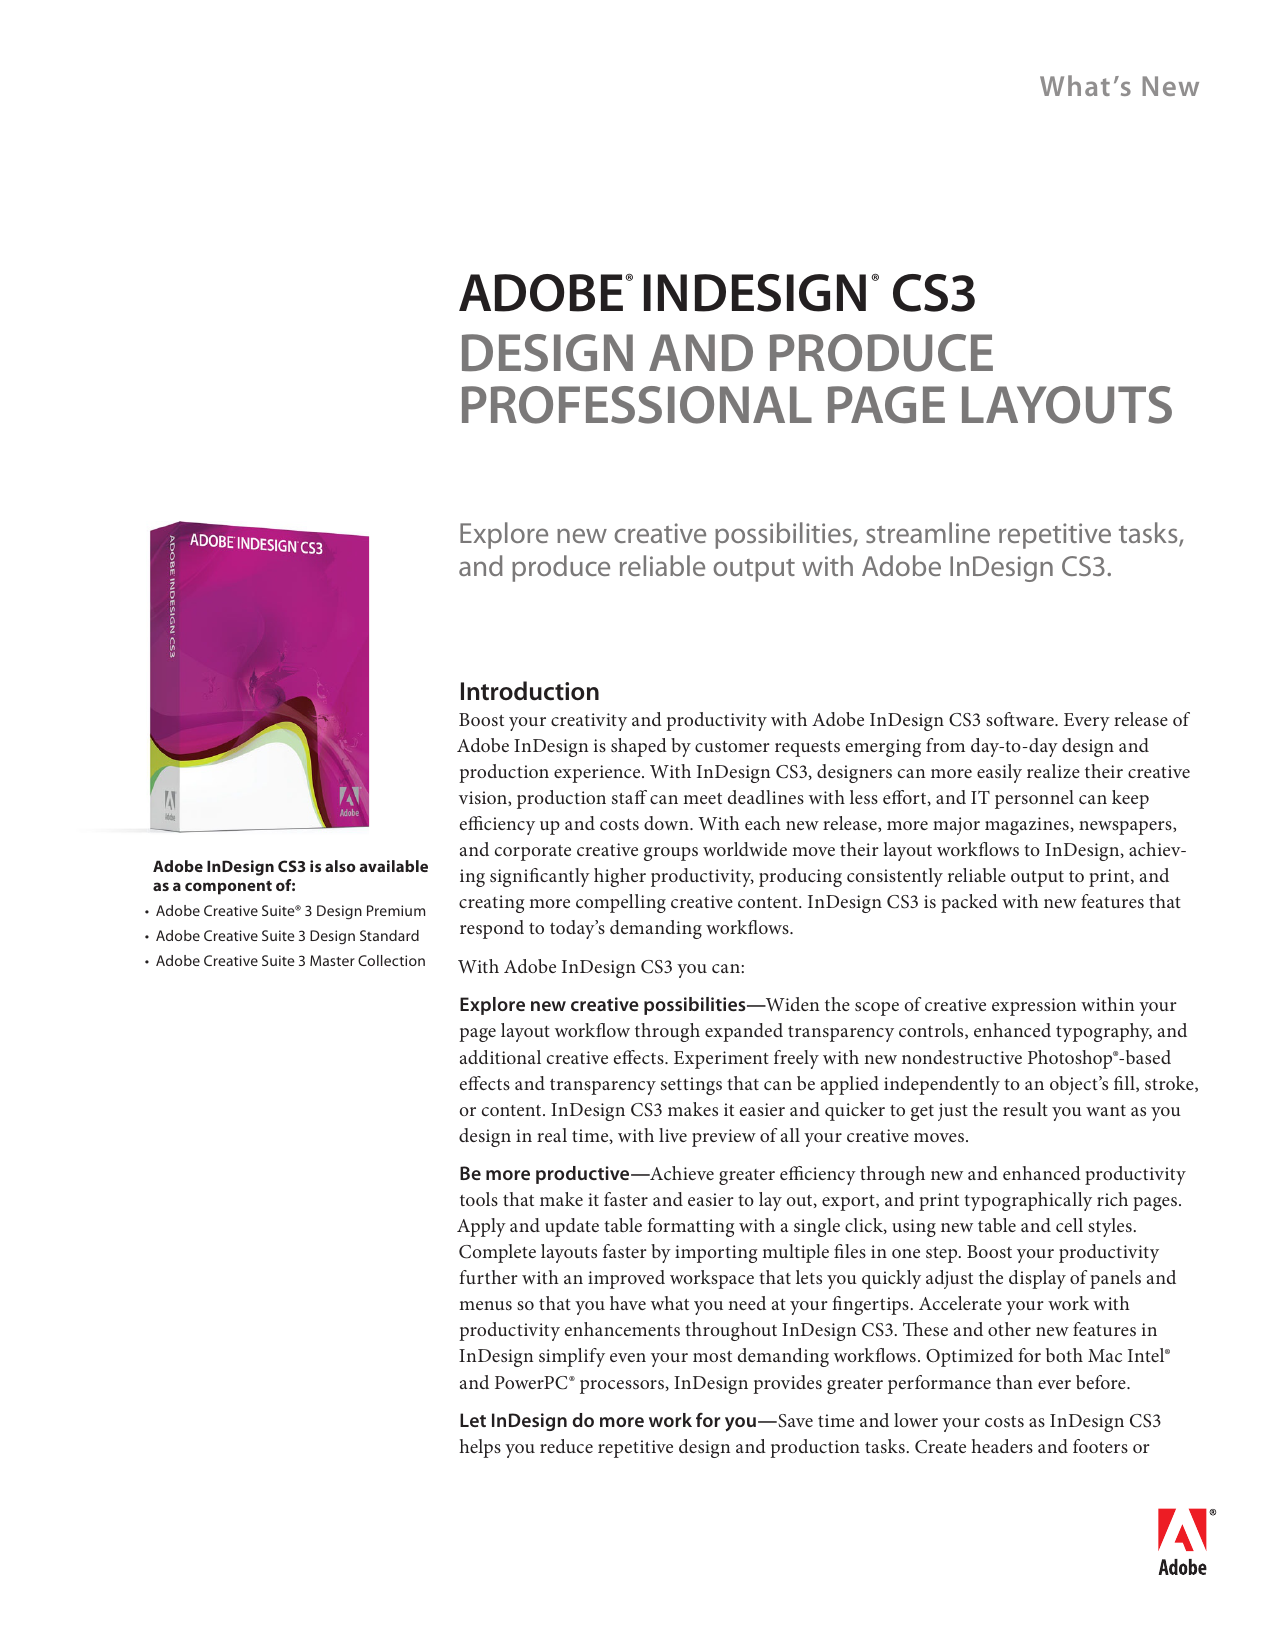 use adobe indesign cs3